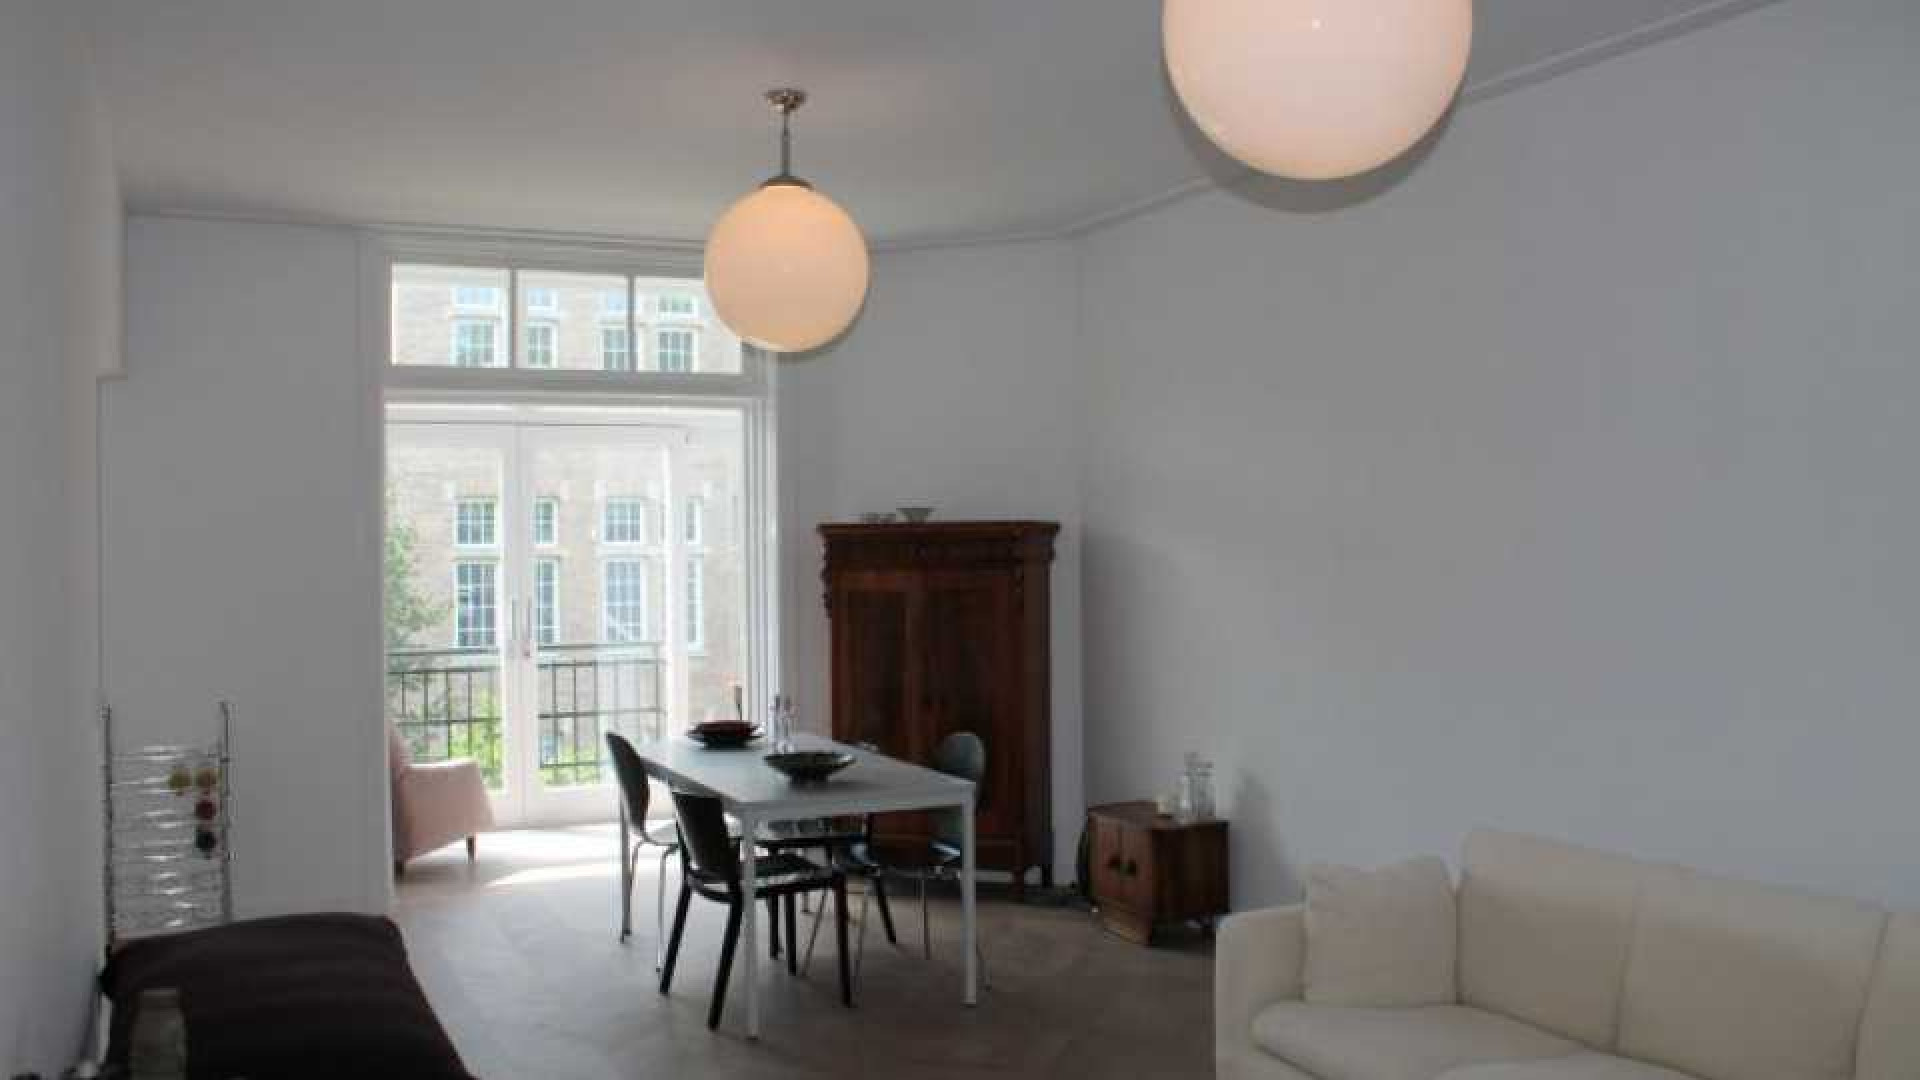 Dave Roelvink huurt appartement in Amsterdam Oud-Zuid. Zie foto's 4